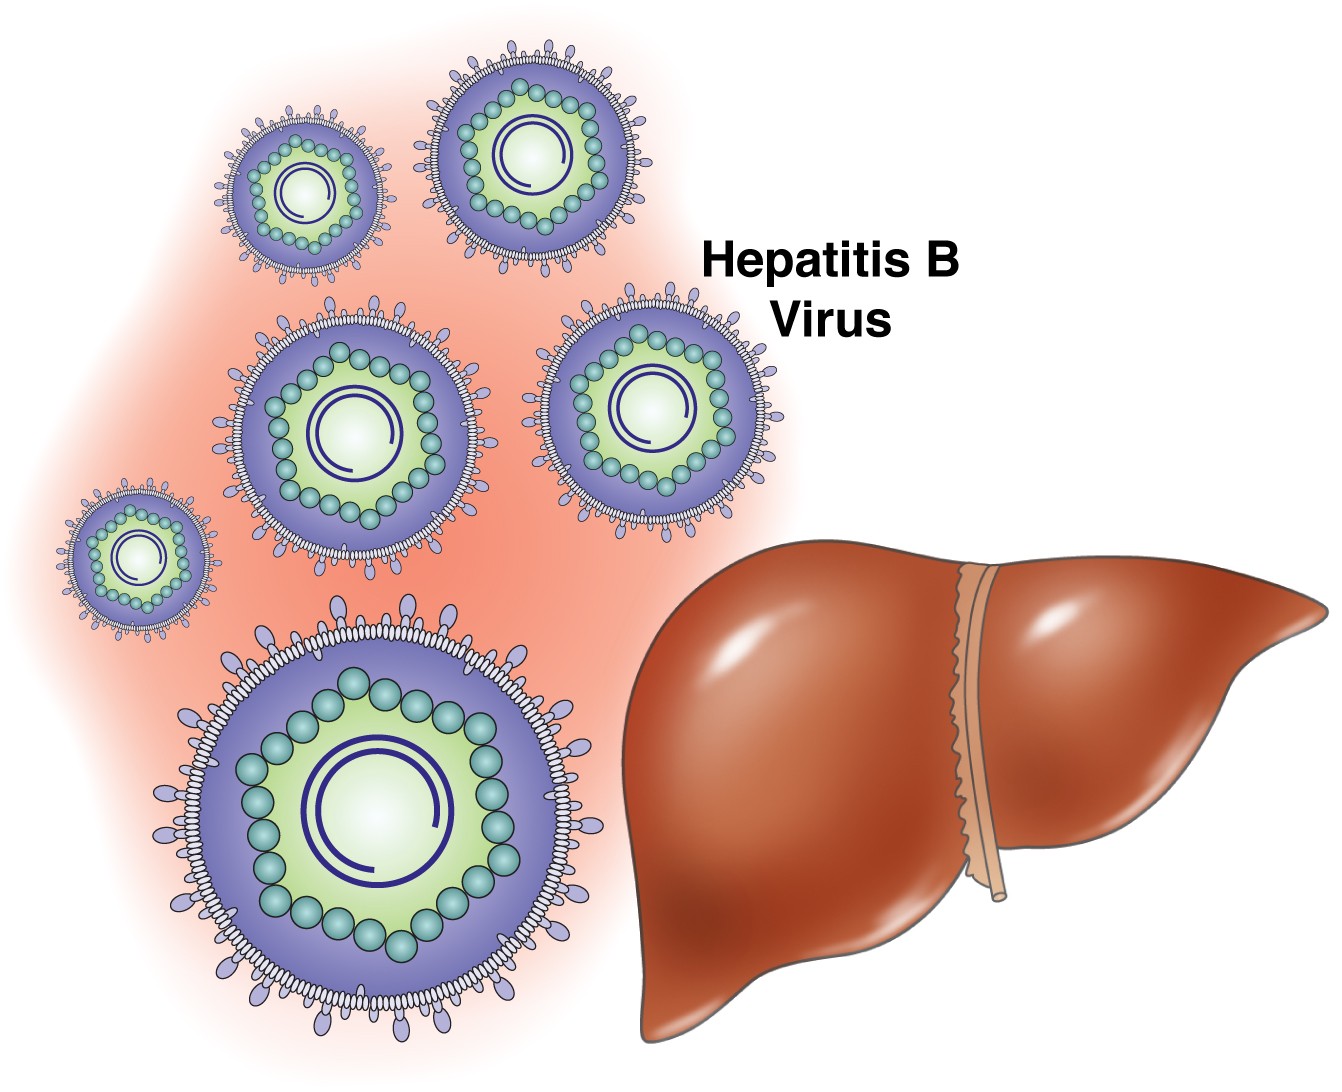 characteristics of hepatitis b